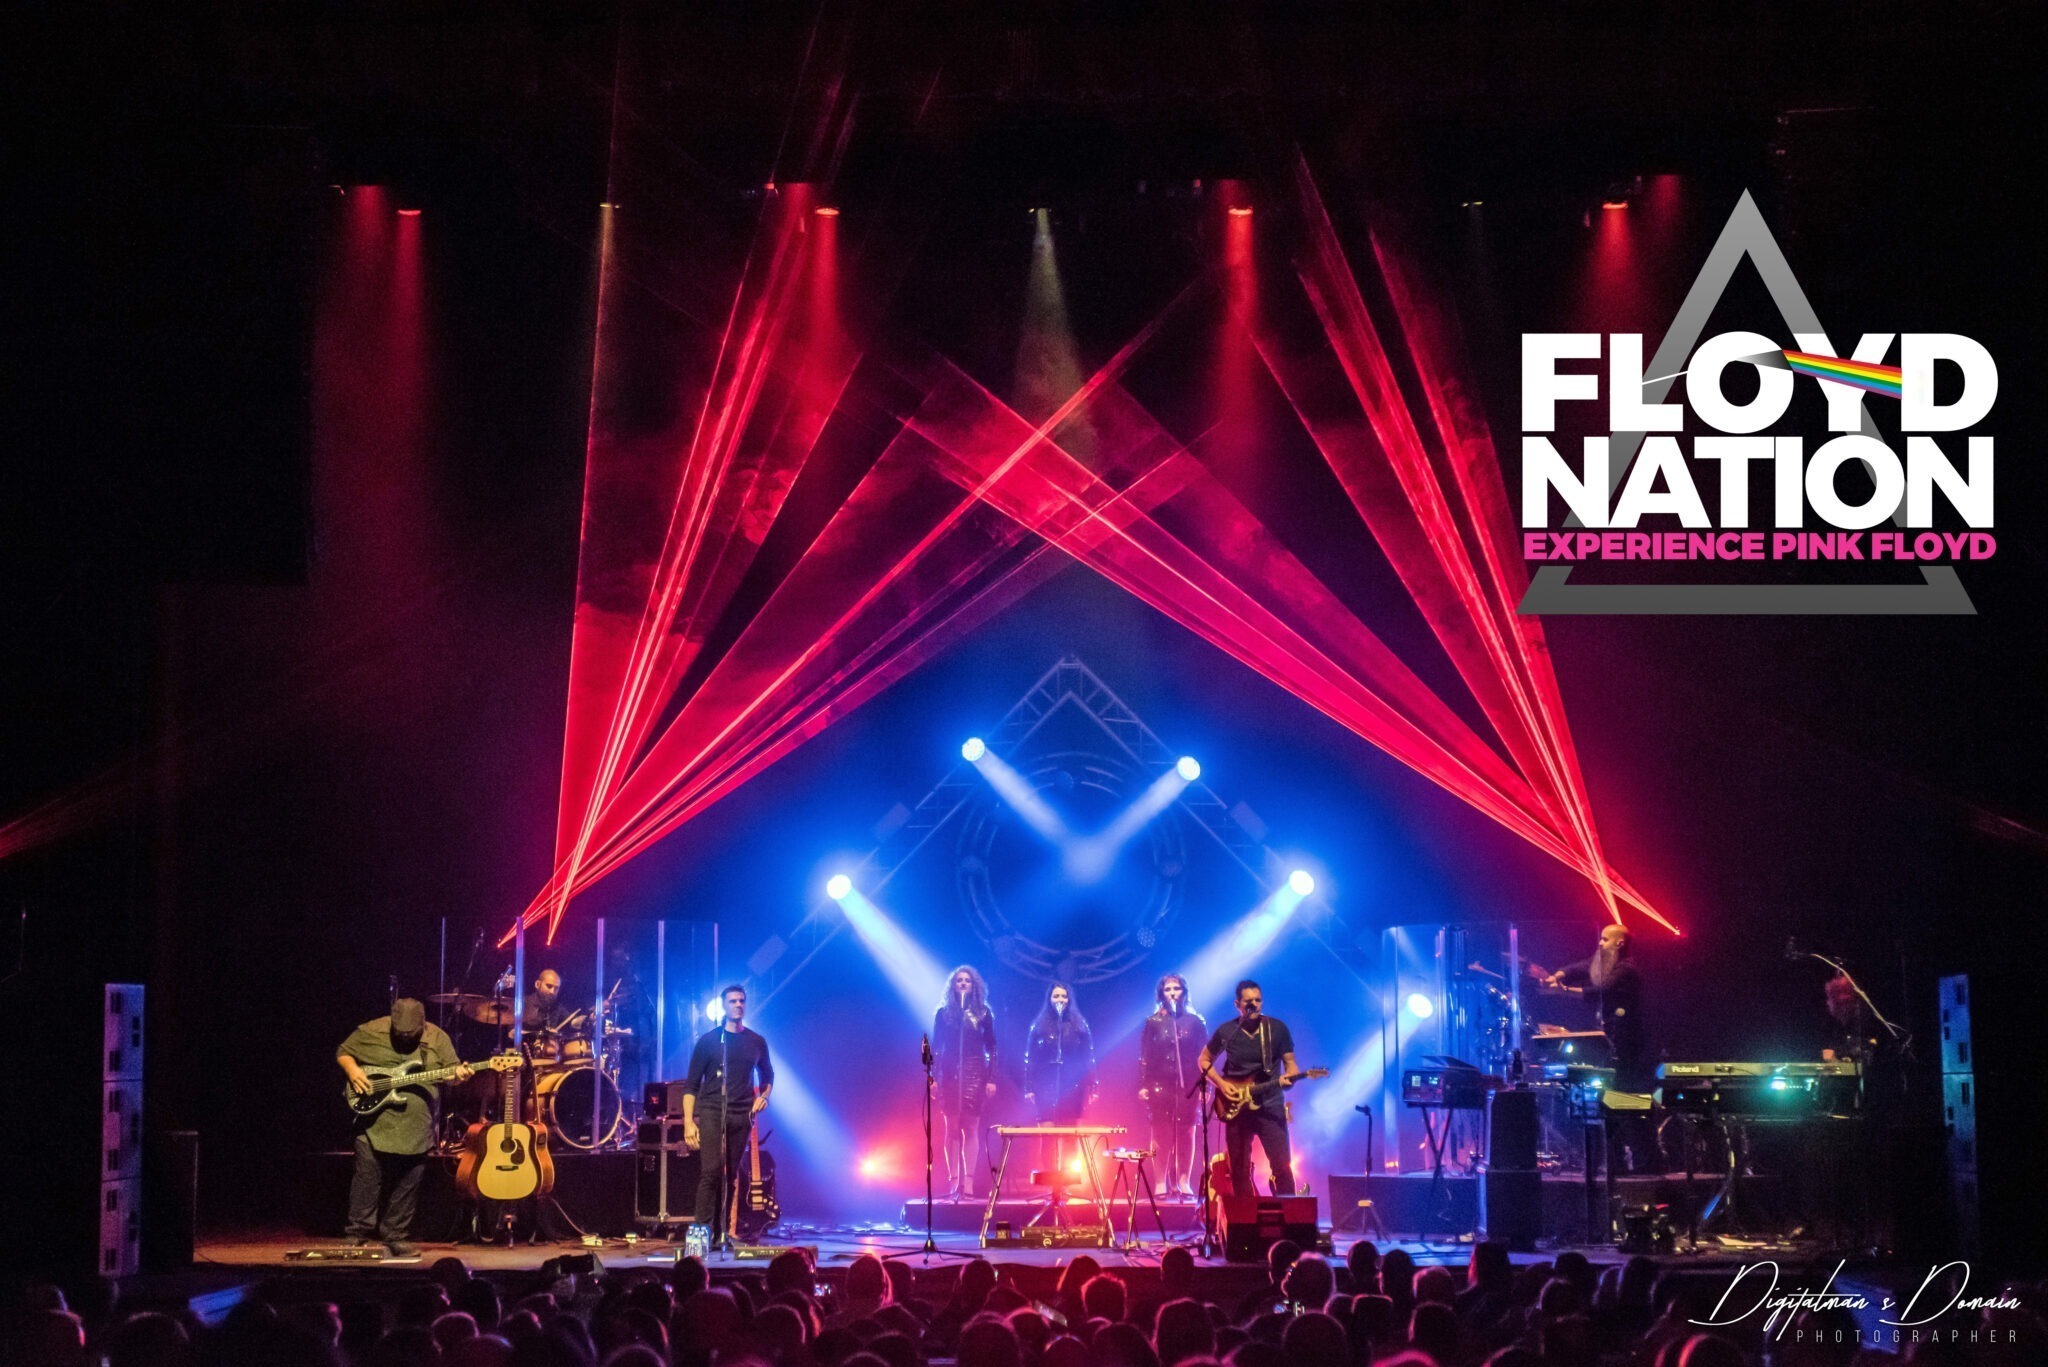 Floyd Nation Experience Pink Floyd at Reynolds Performance Hall